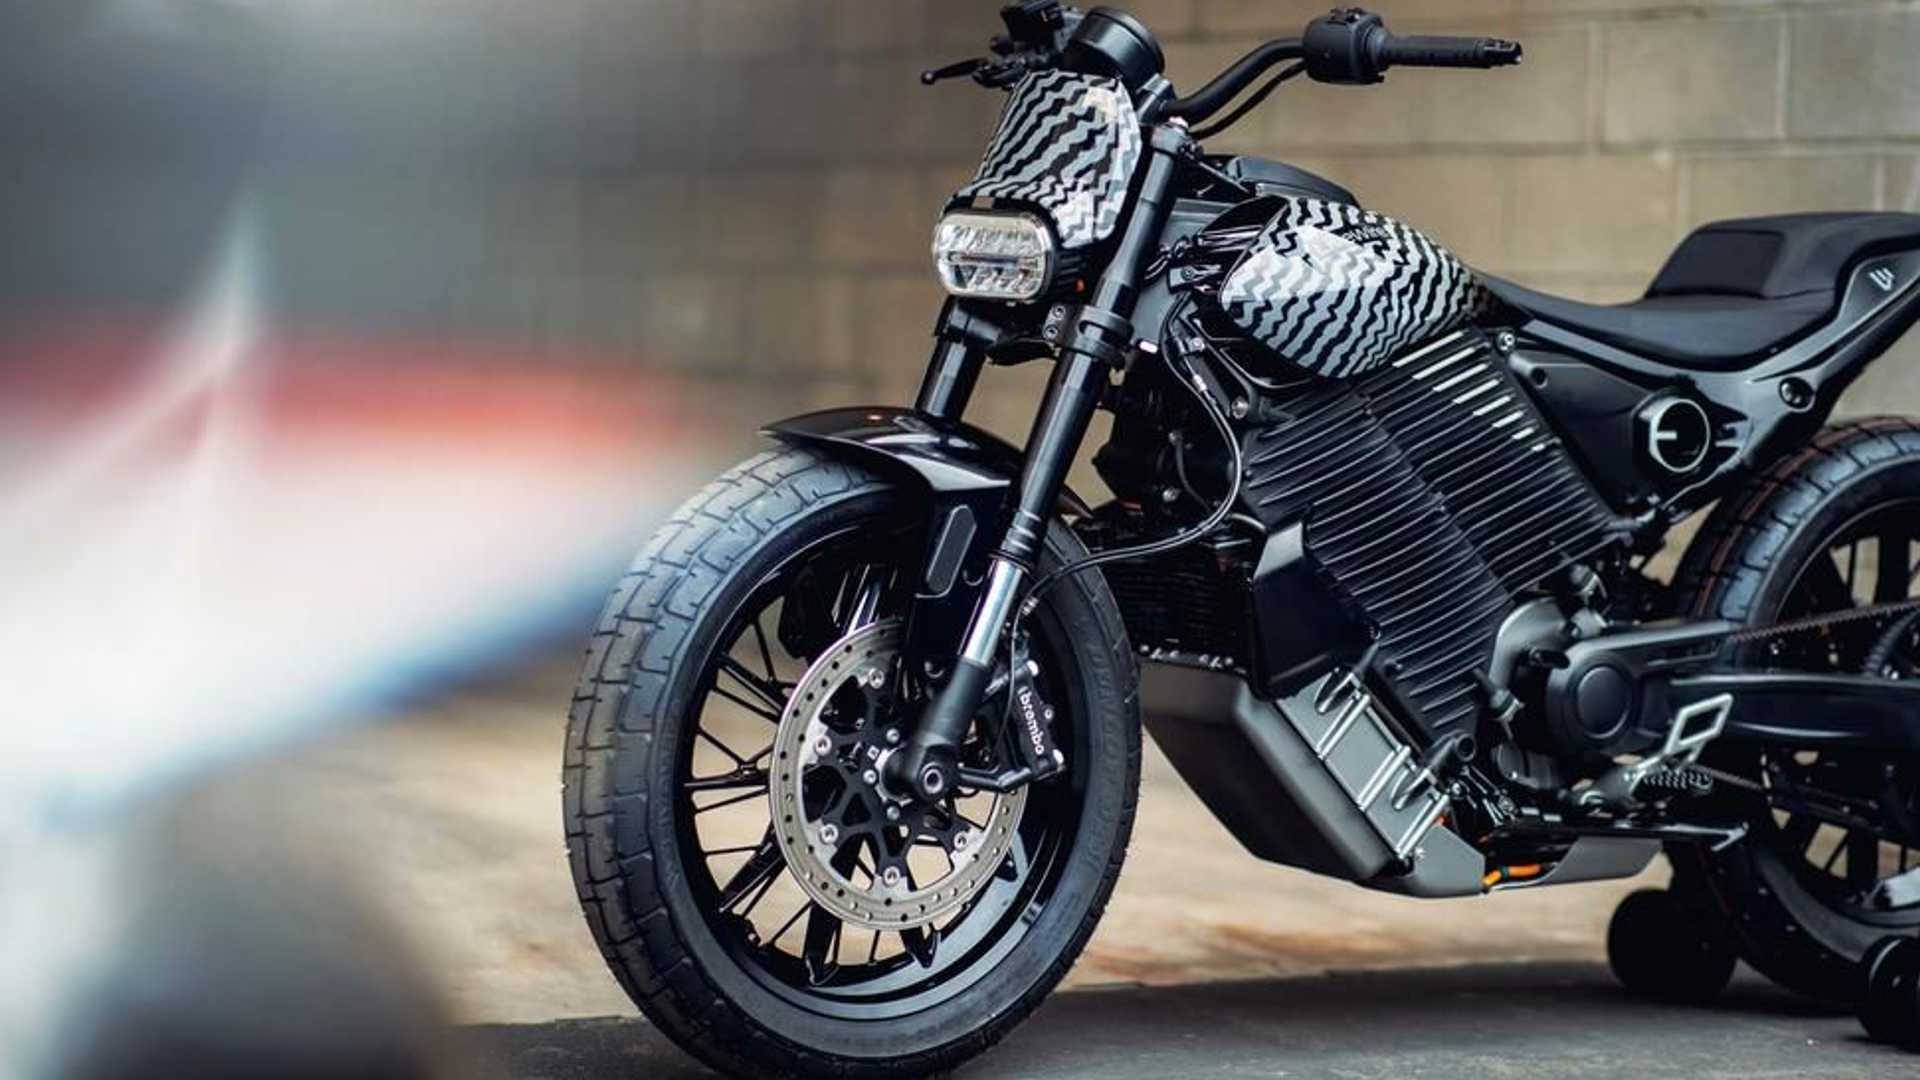 Harley-Davidson представив ще один електробайк